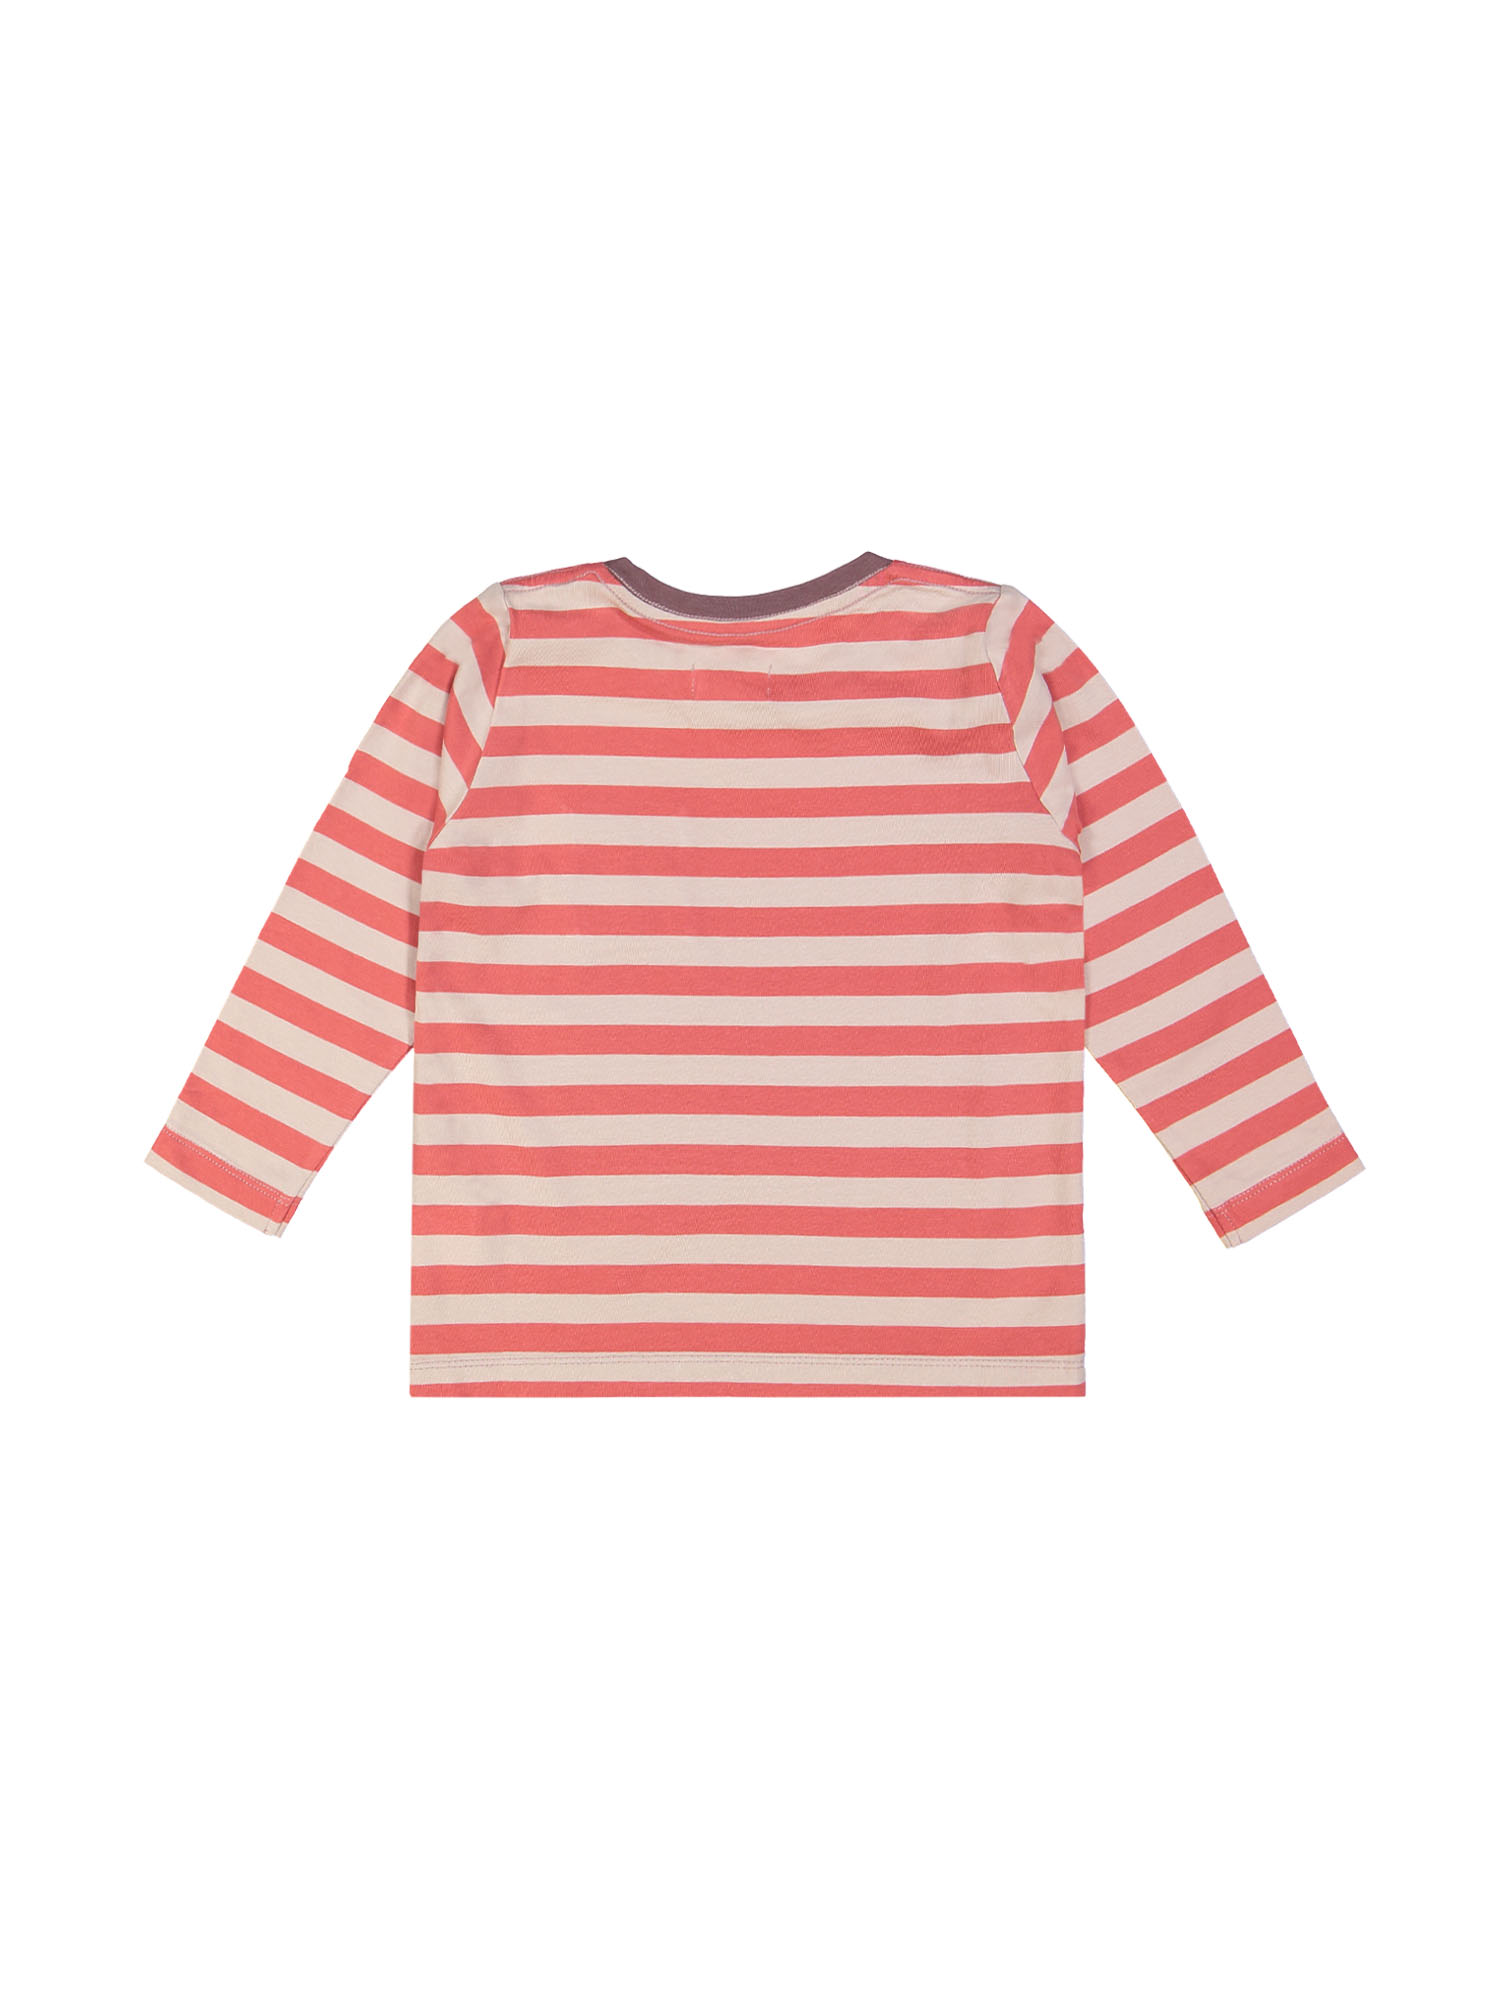 T-shirt stripe rood paars 04j